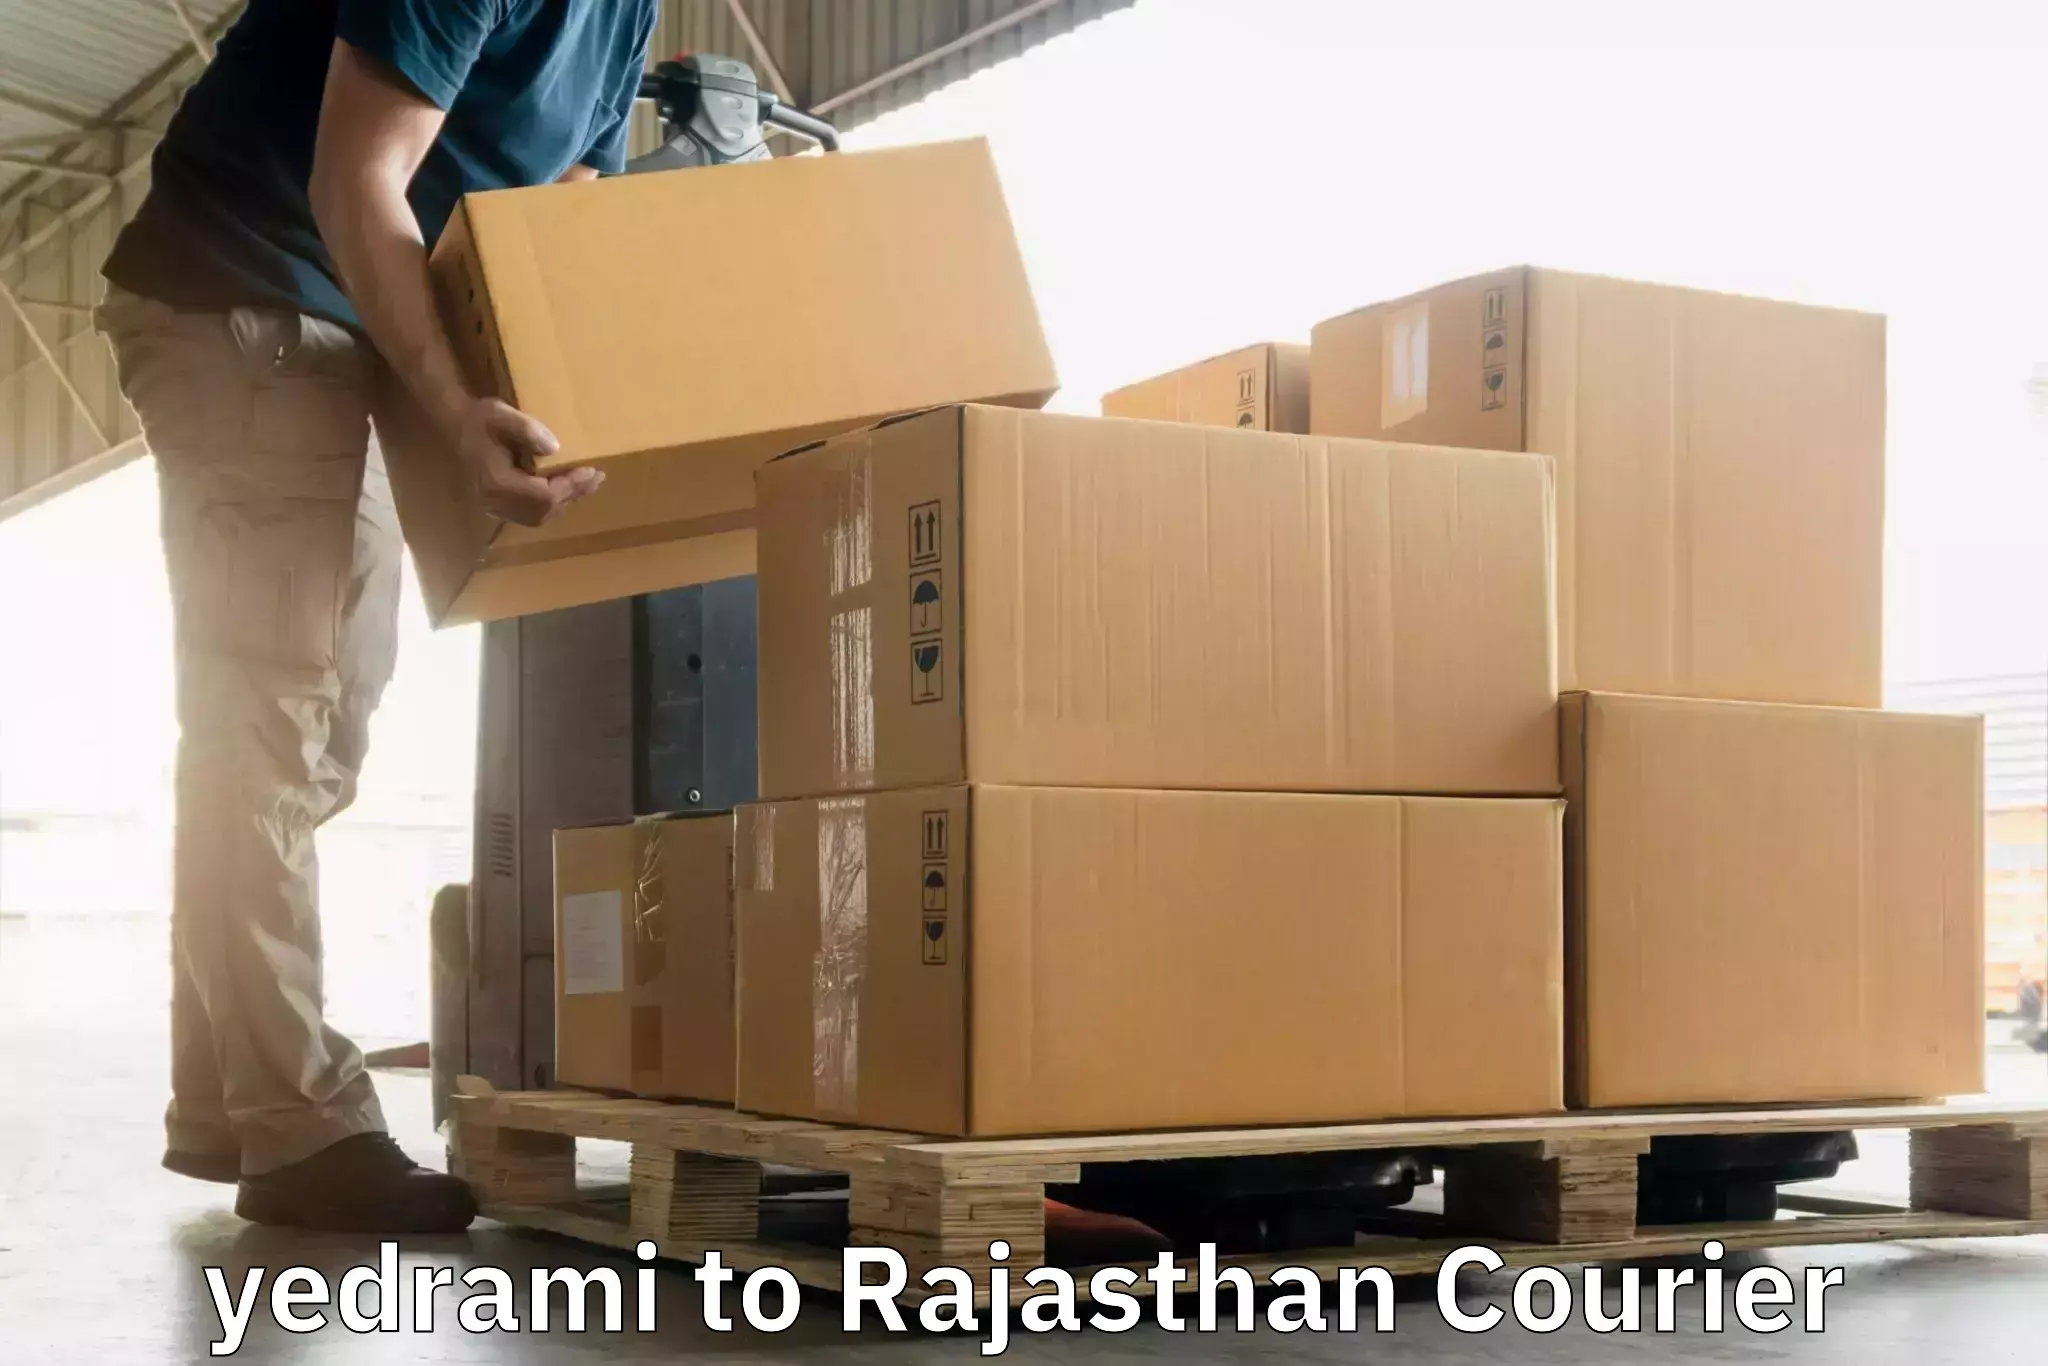 24/7 courier service yedrami to Viratnagar